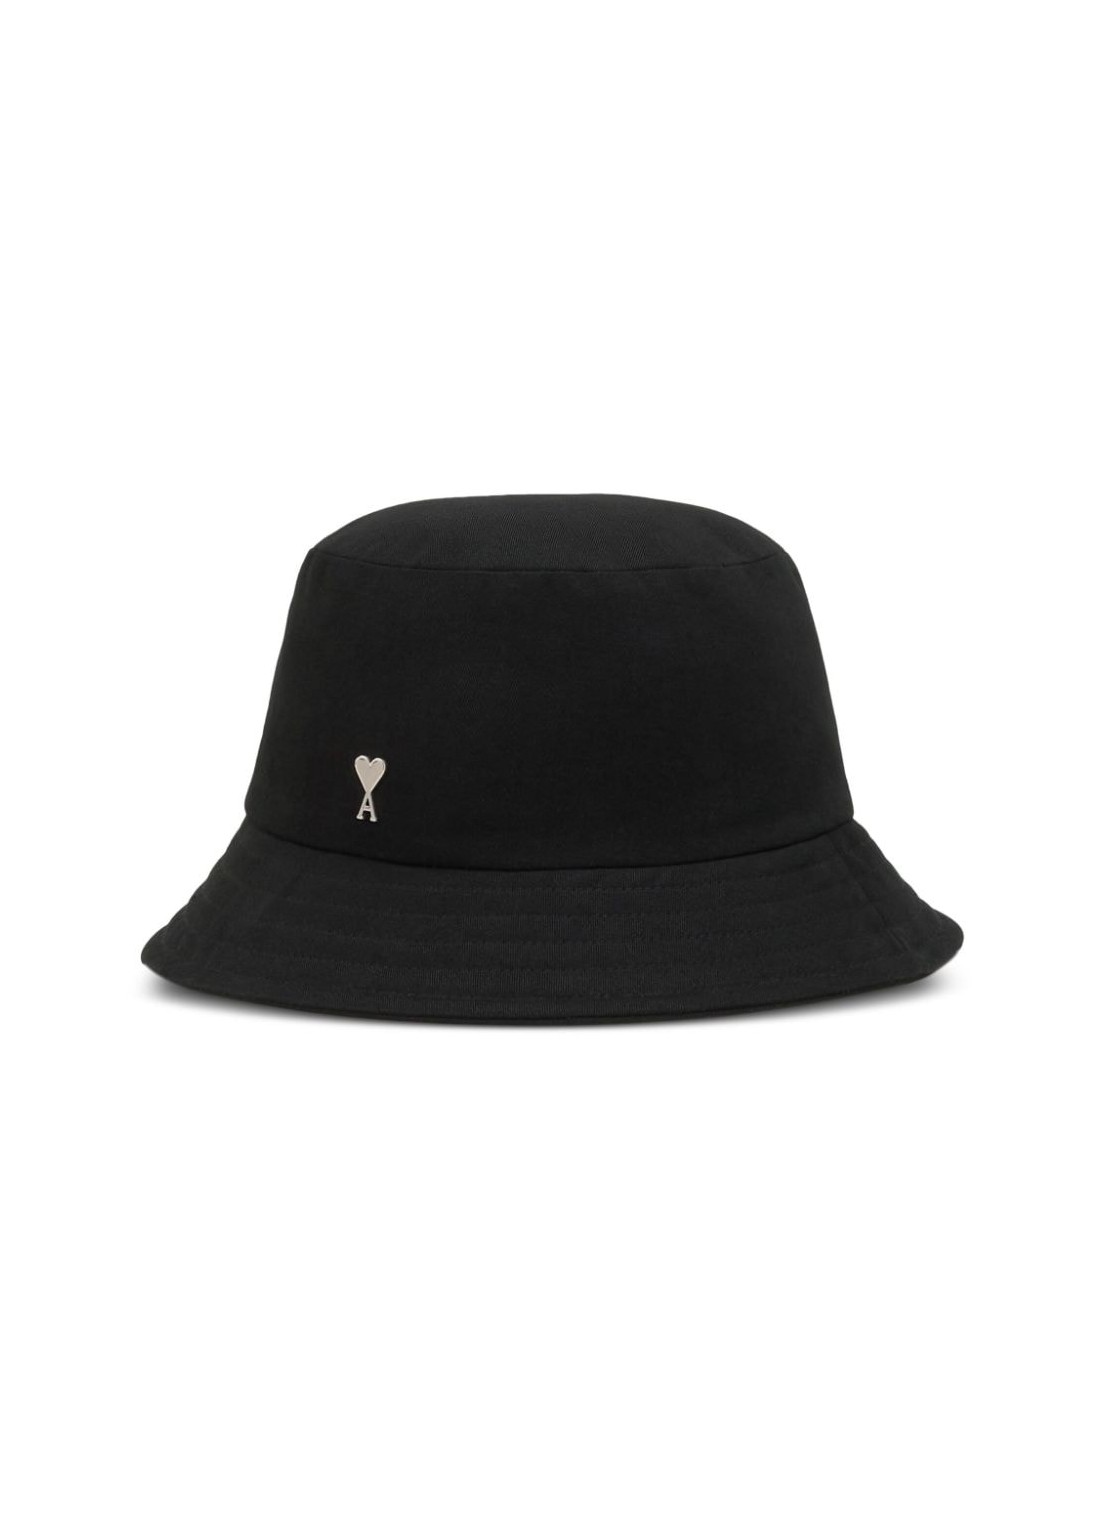 Gorras ami cap manreversible adc bucket hat - uha240pa0007 001 talla negro
 